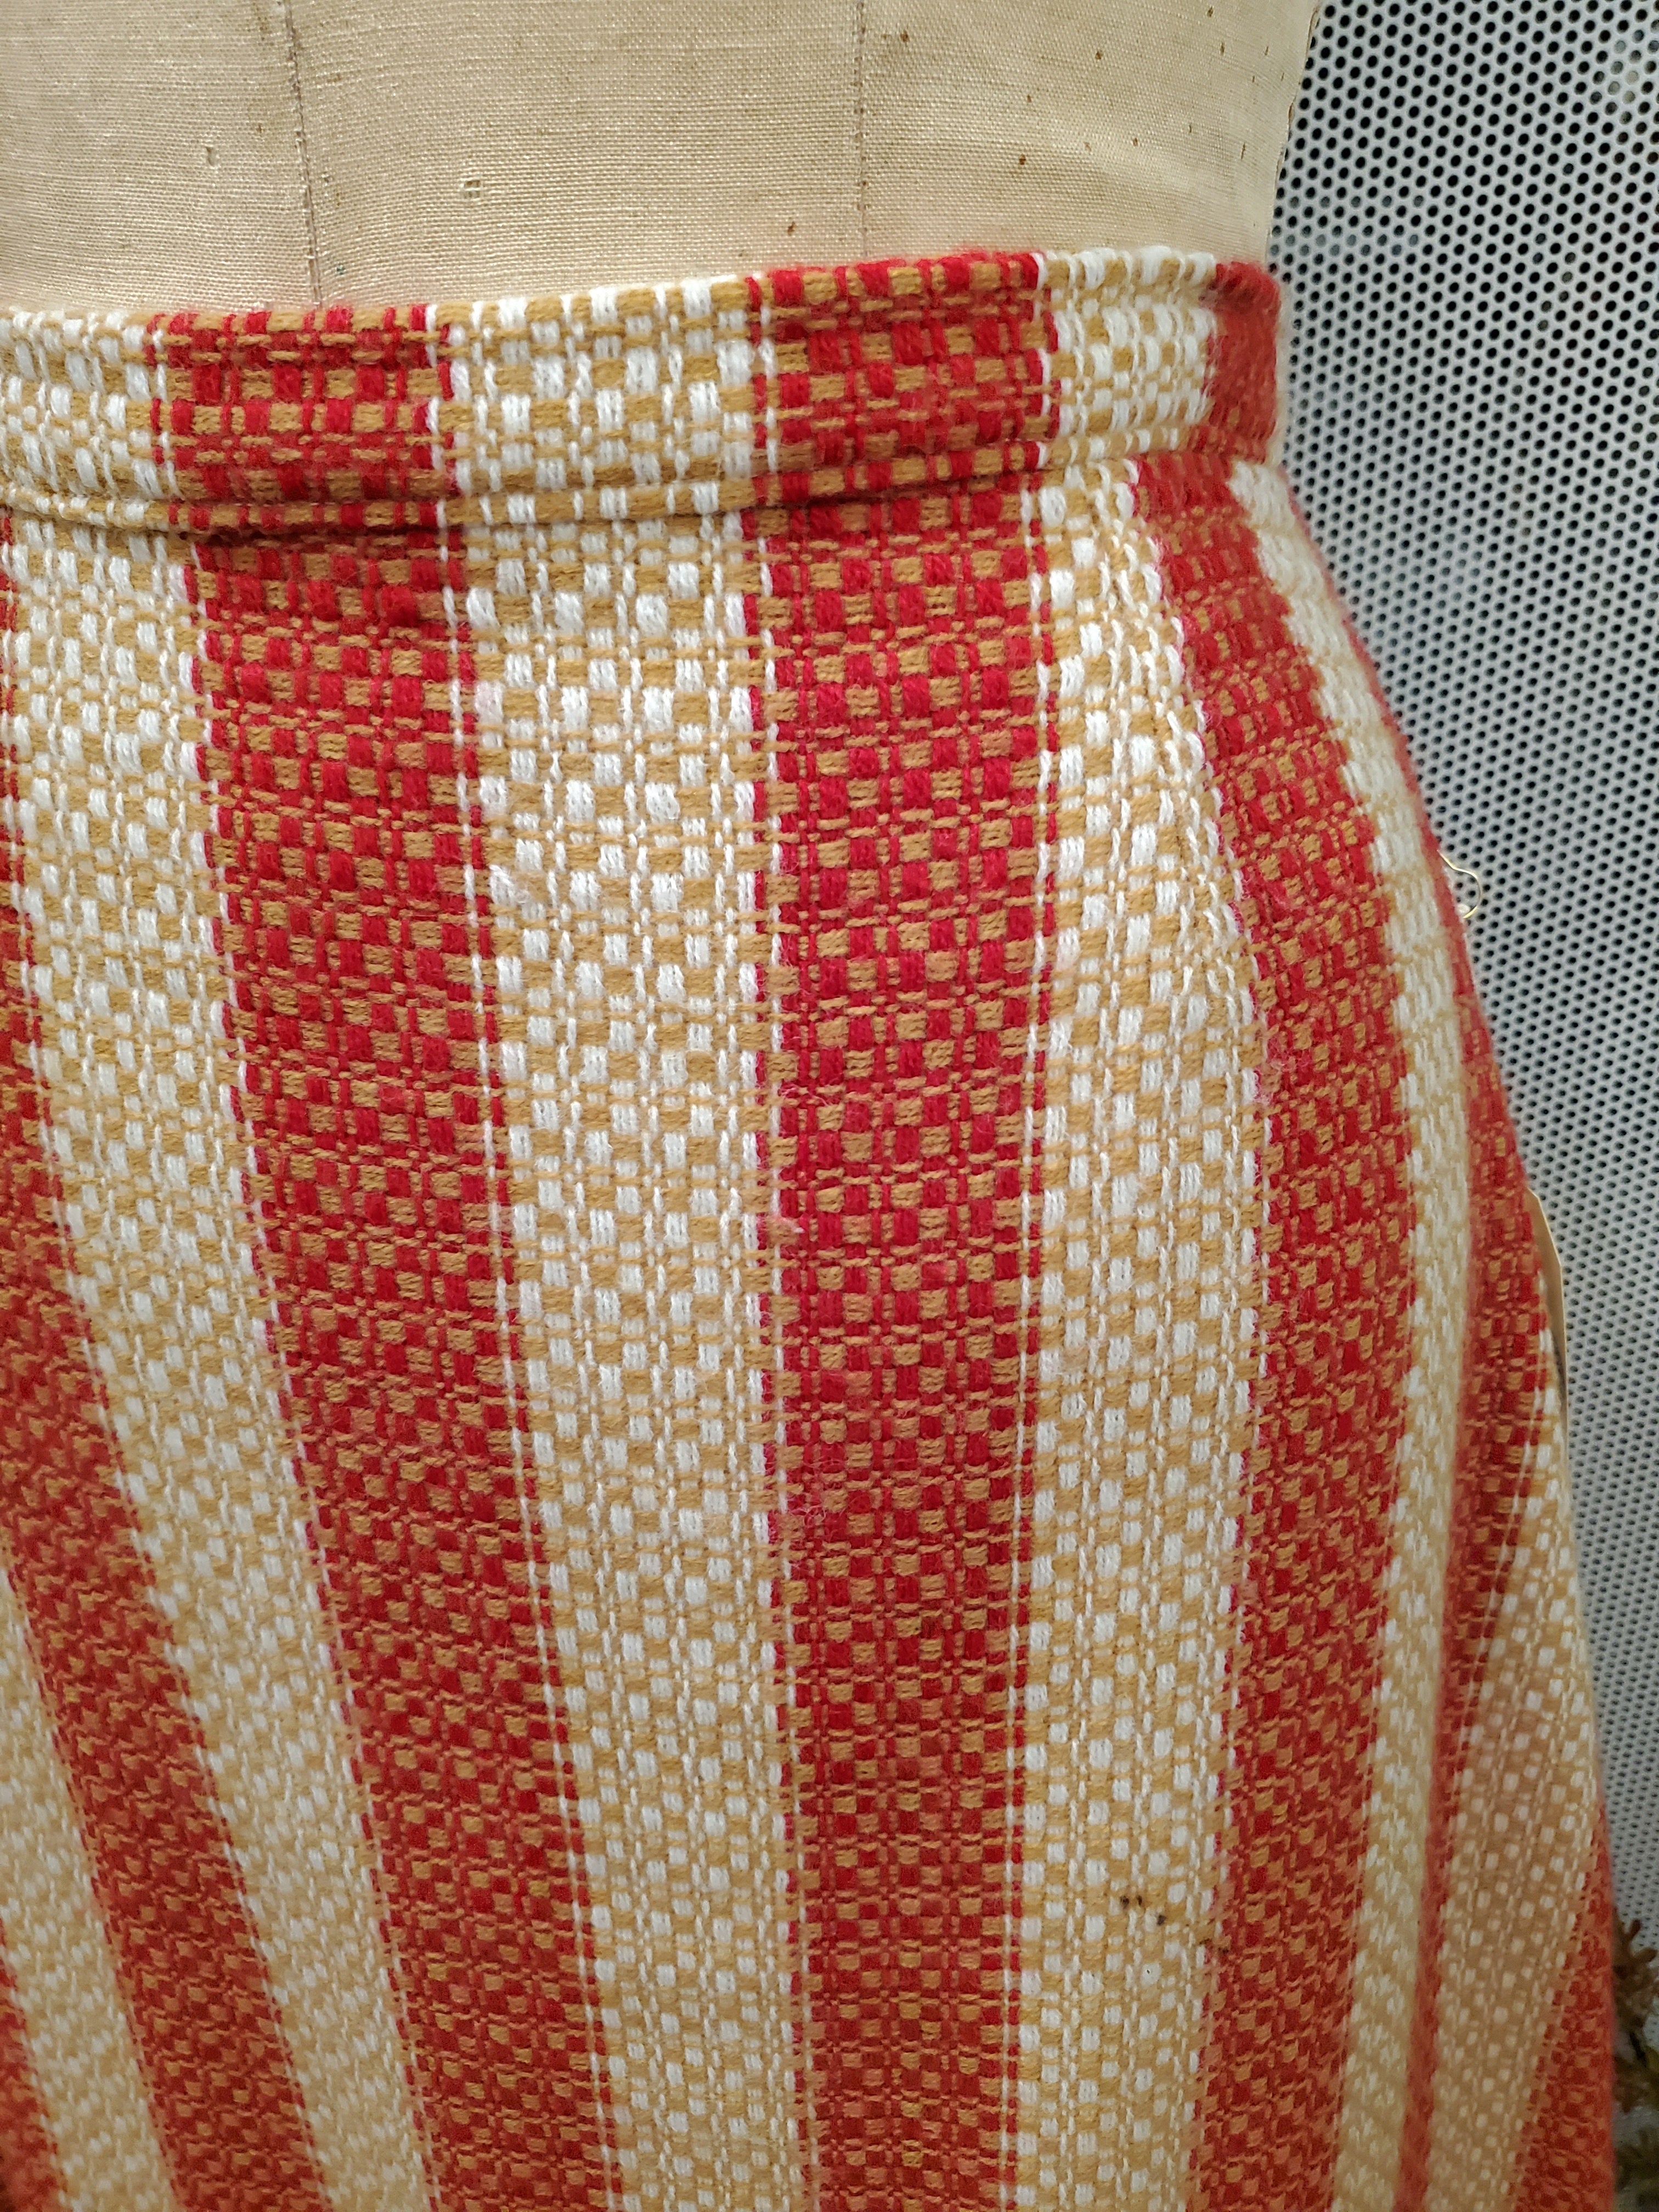 1960’s Striped Maxi Skirt